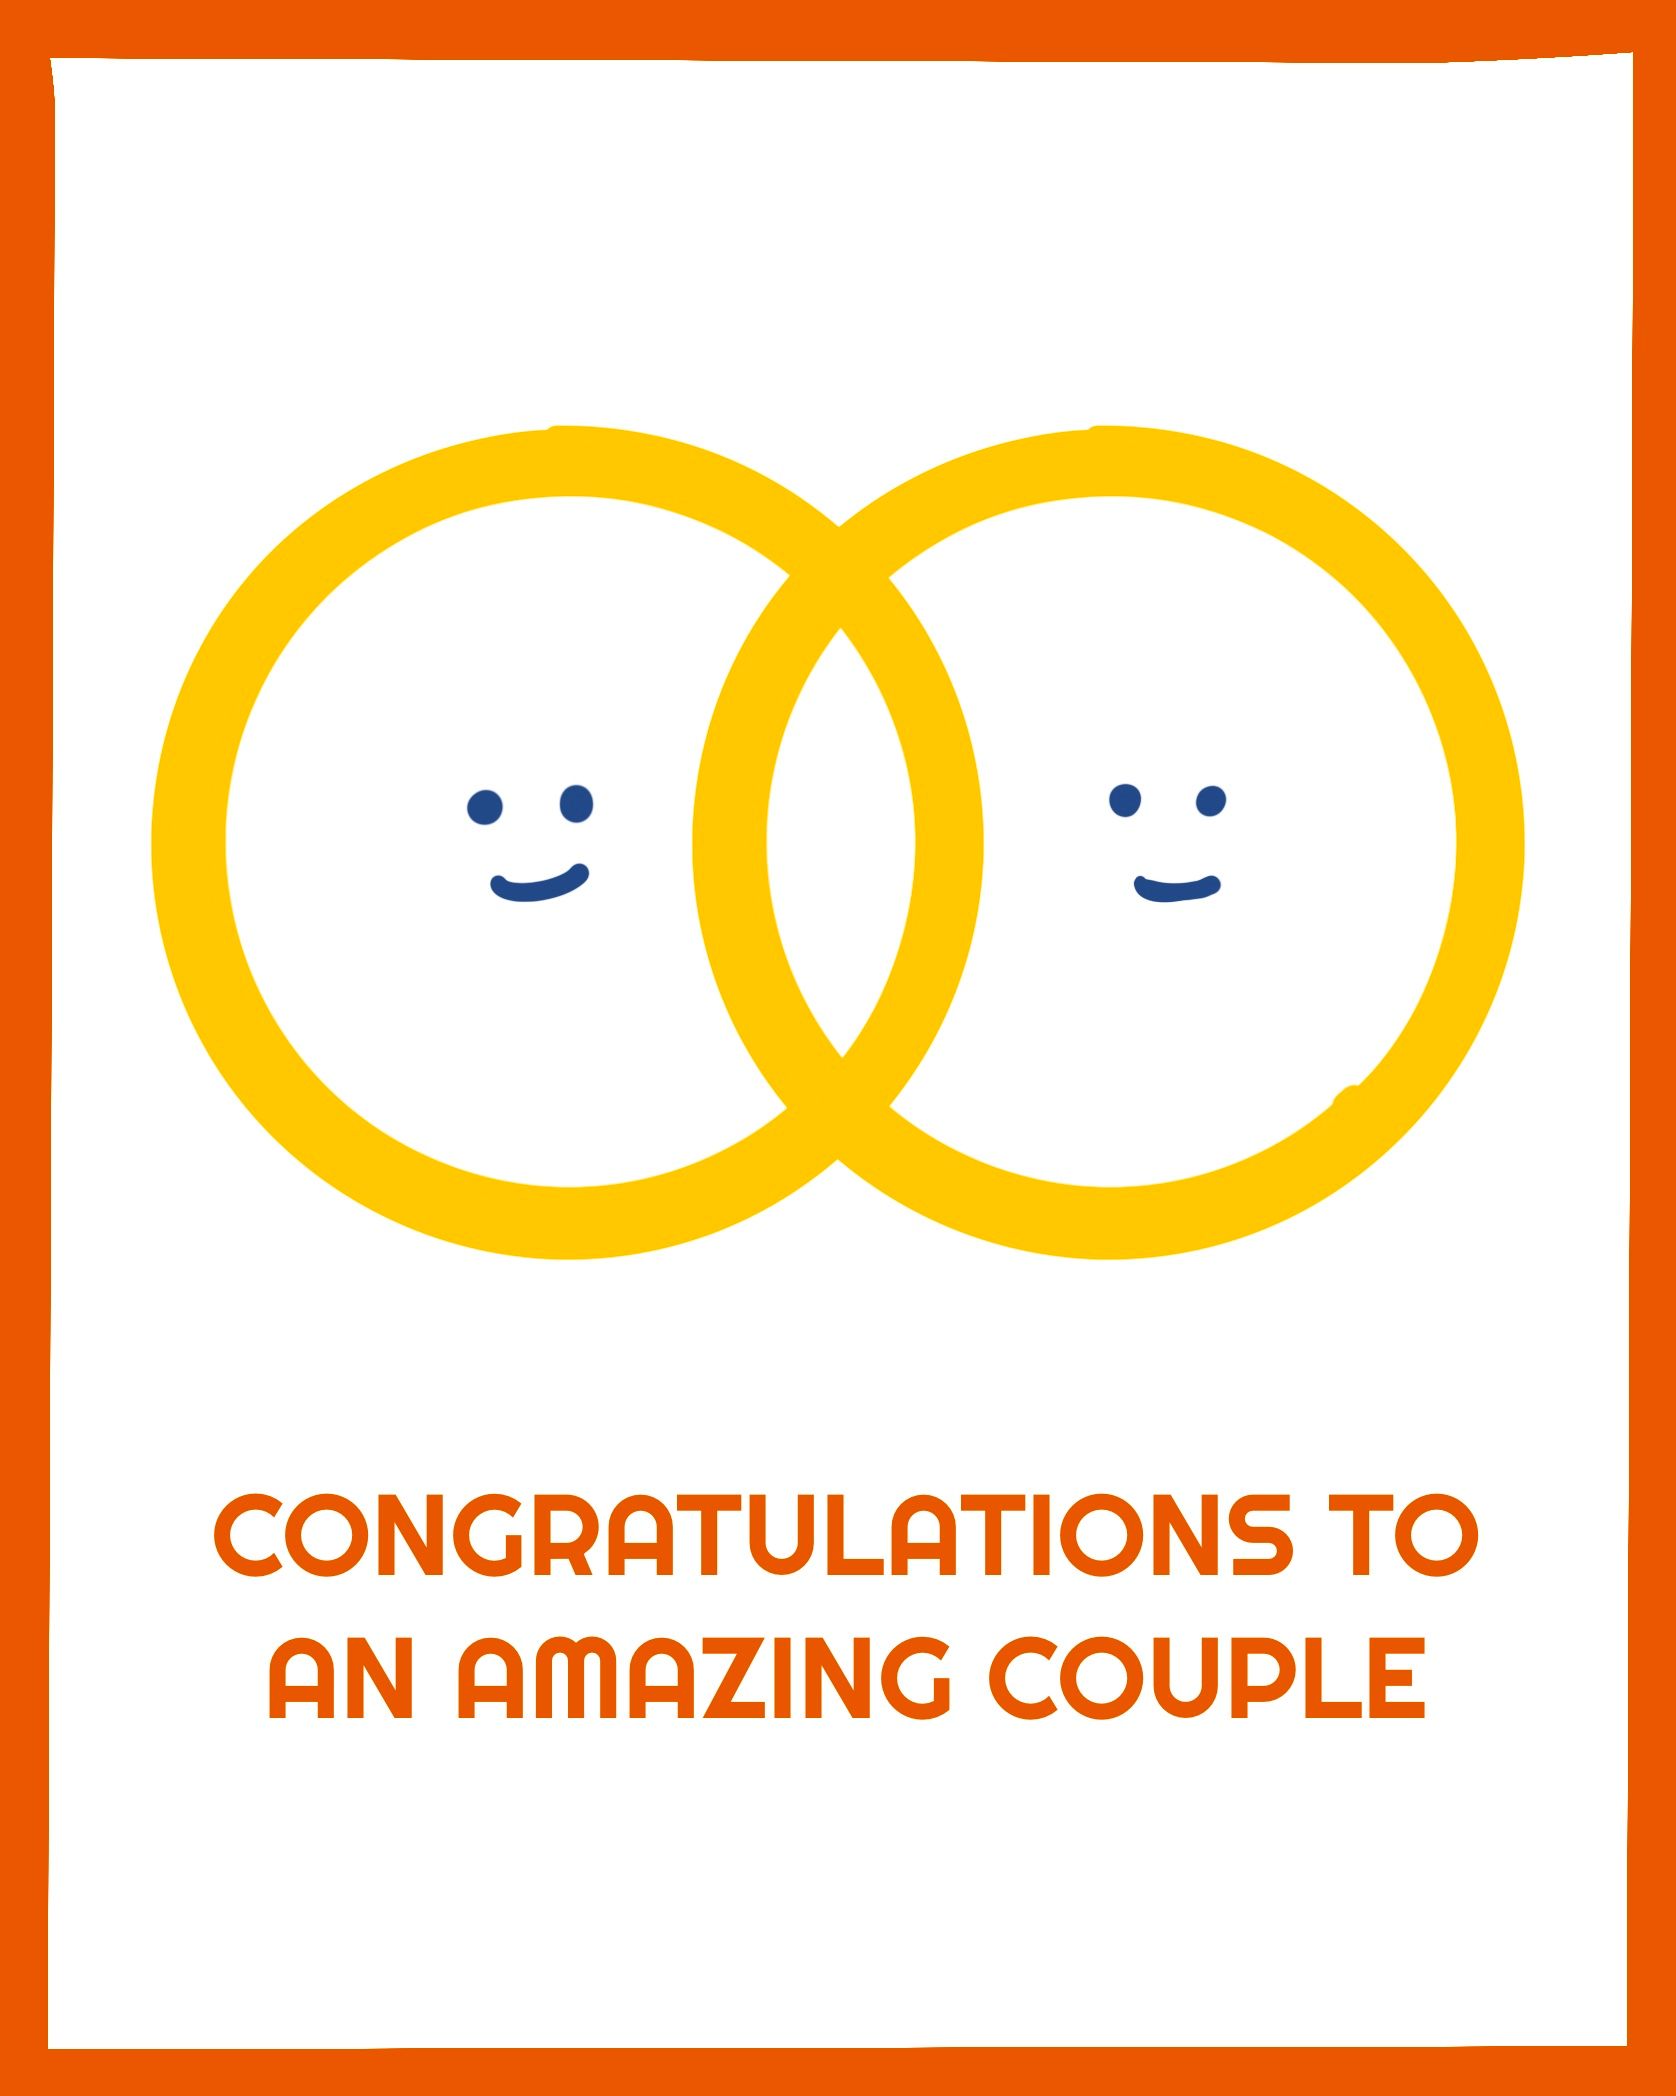 Card design "congratulations to an amazing couple"